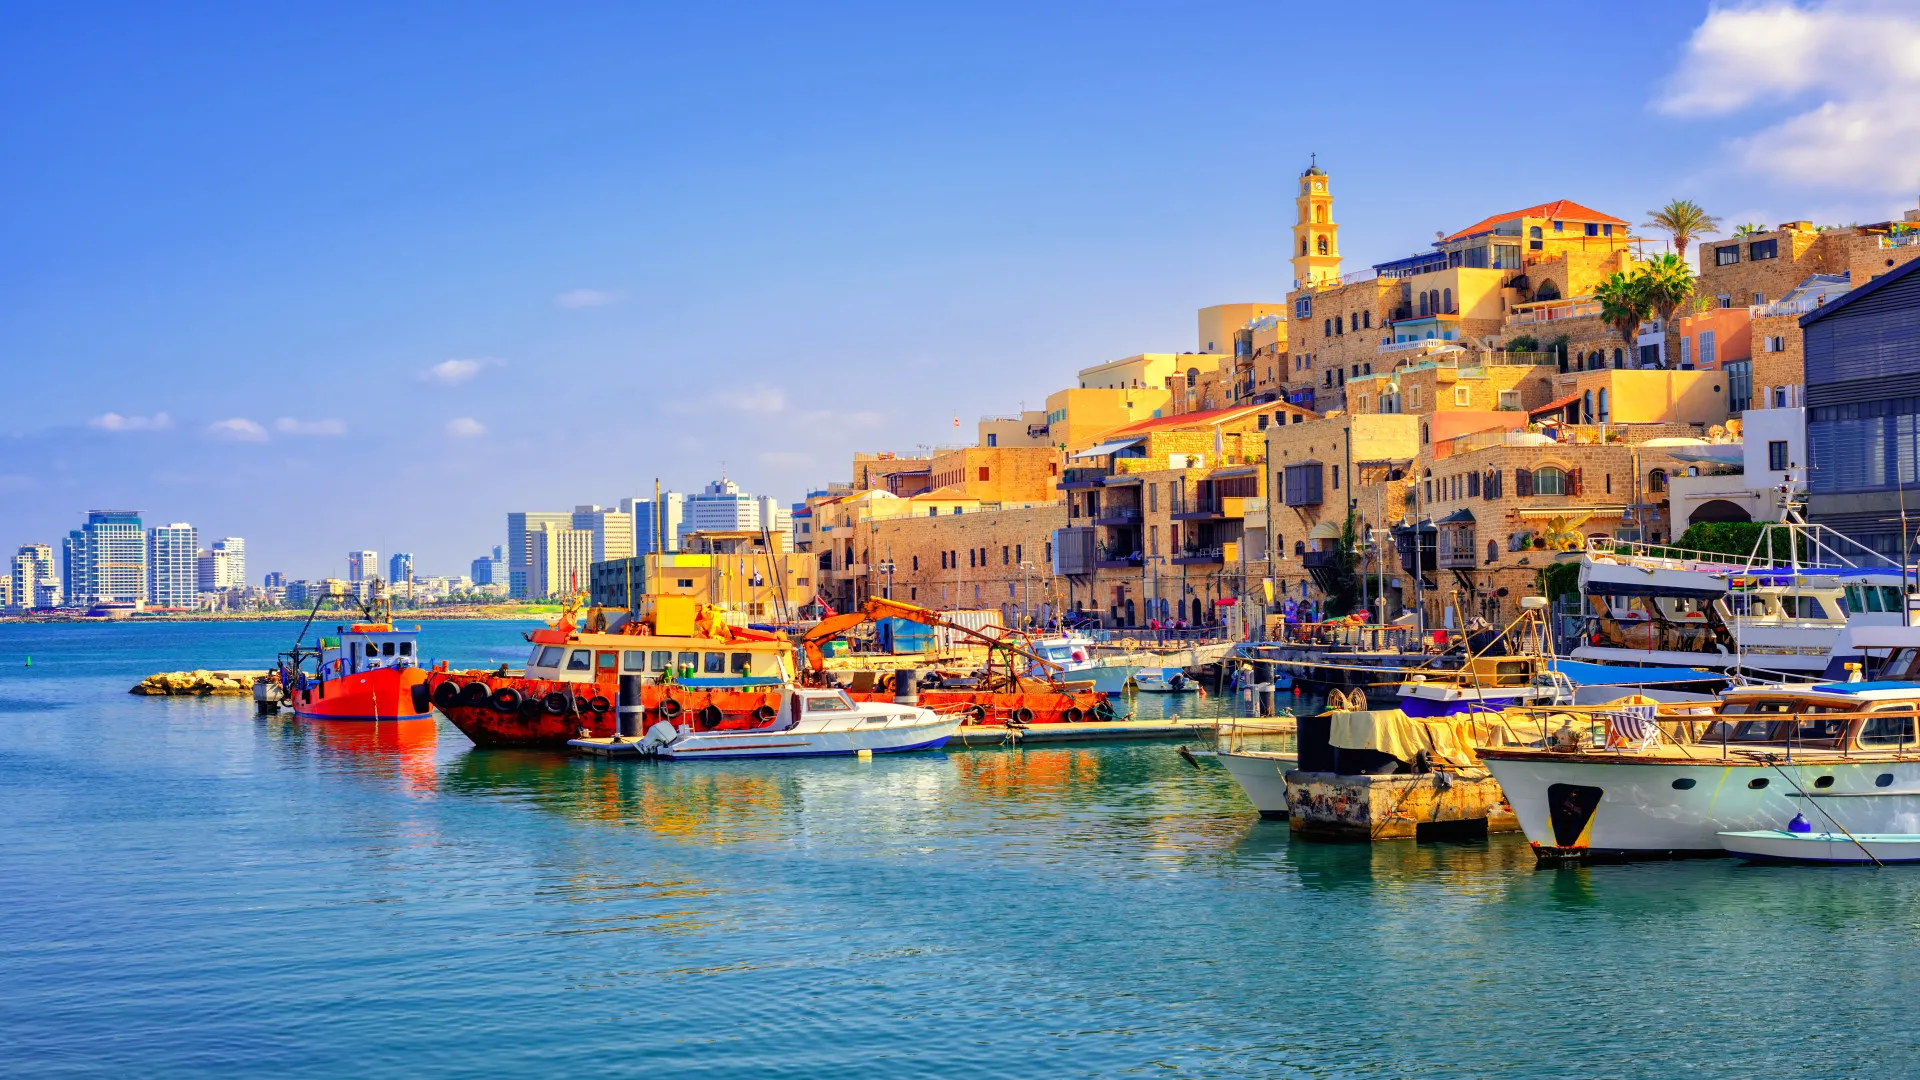 Oude stad en haven van Jaffa met de moderne skyline van Tel Aviv op achtergrond, Israël